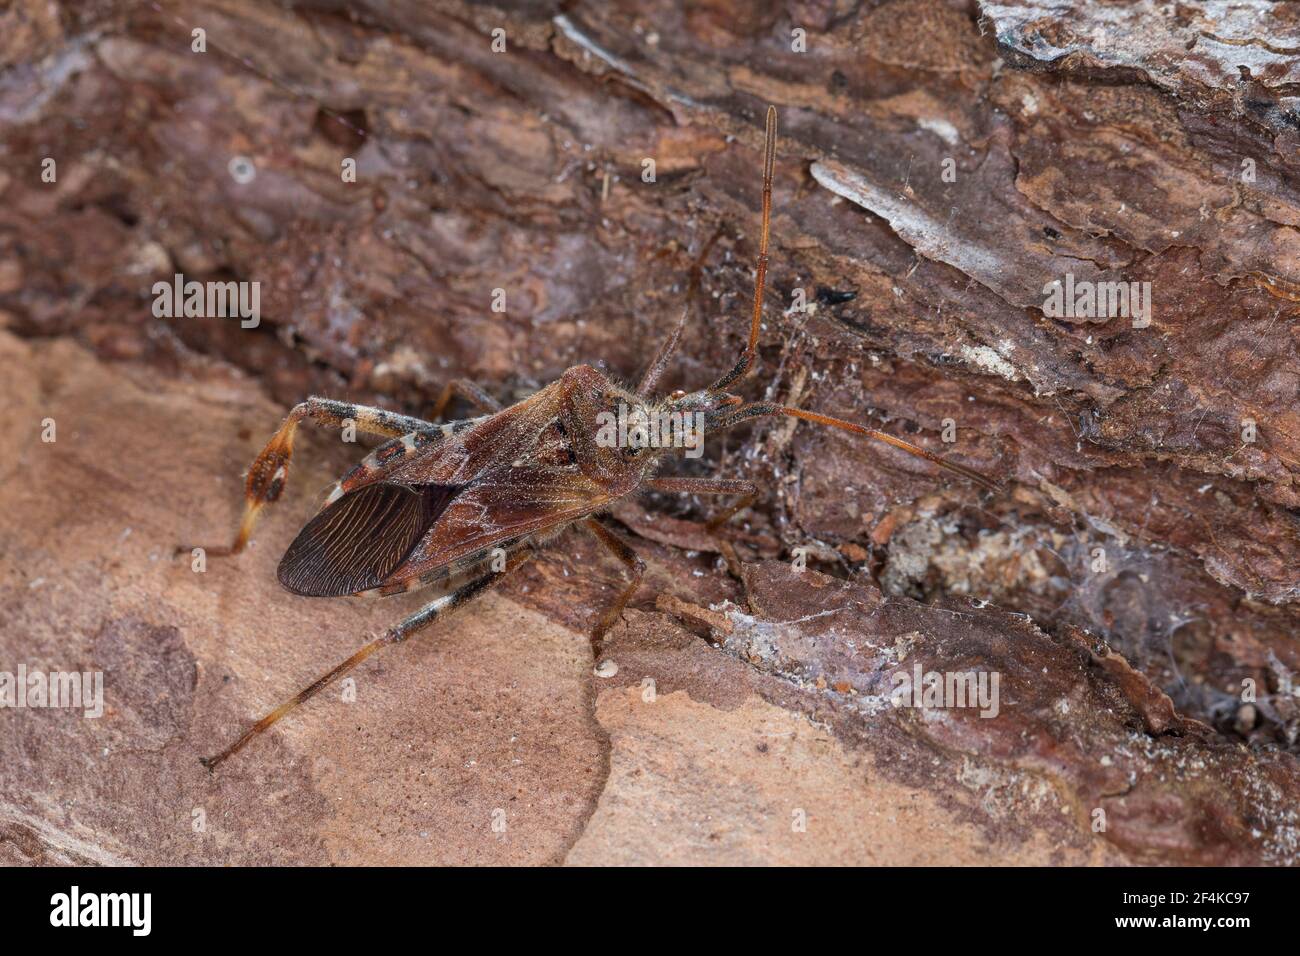 Amerikanische Kiefernwanze, Amerikanische Zapfenwanze, Nordamerikanische Zapfenwanze, Leptoglossus occidentalis, western conifer seed bug, la punaise Stock Photo